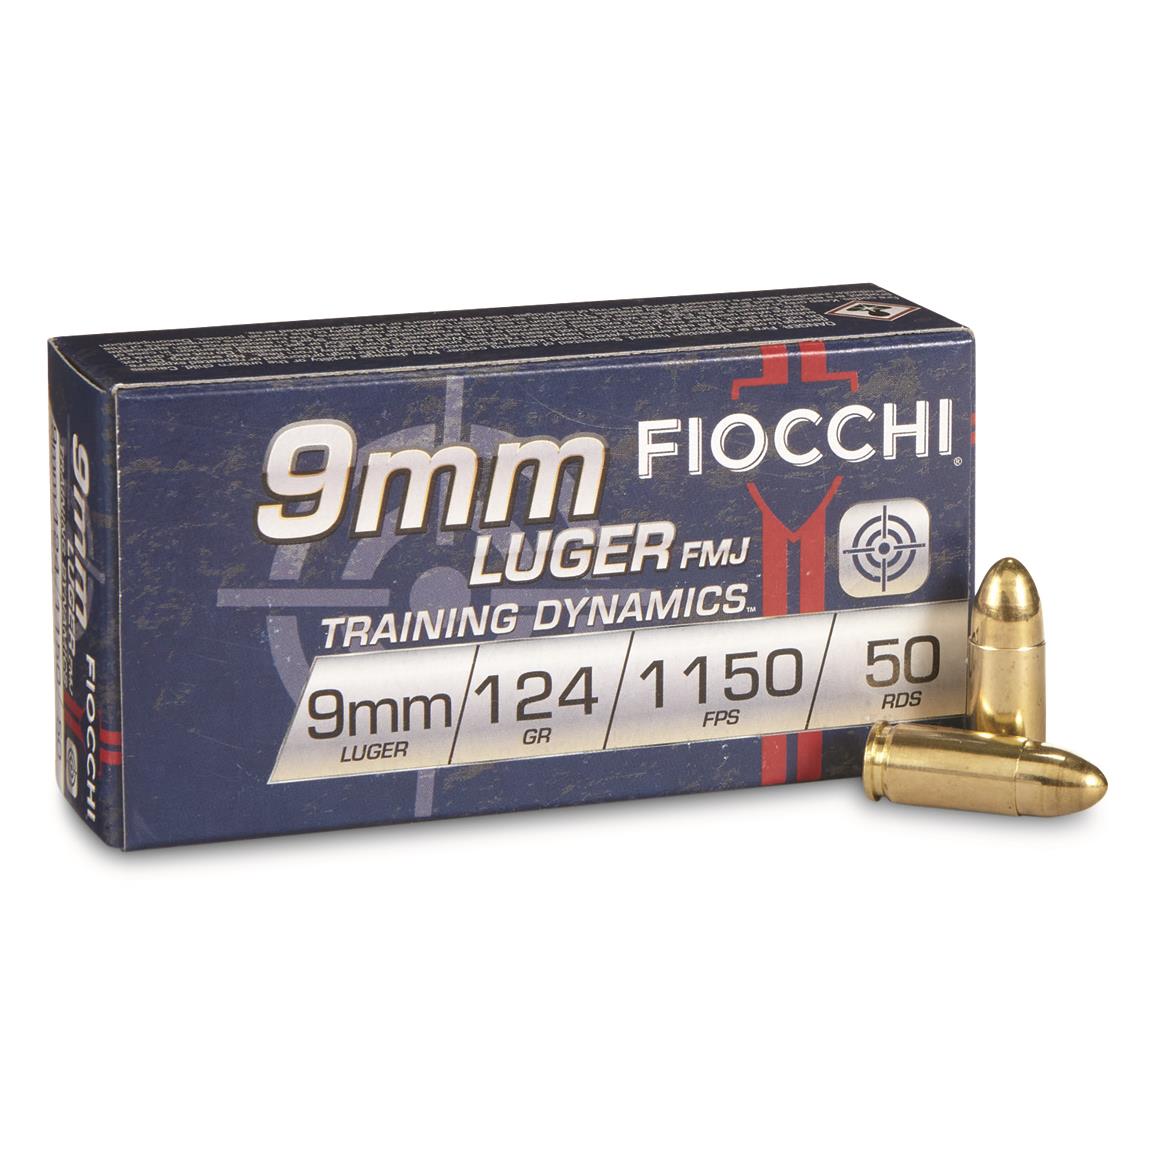 Fiocchi Pistol Shooting Dynamics, 9mm, FMJ, 124 Grain, 50 Rounds